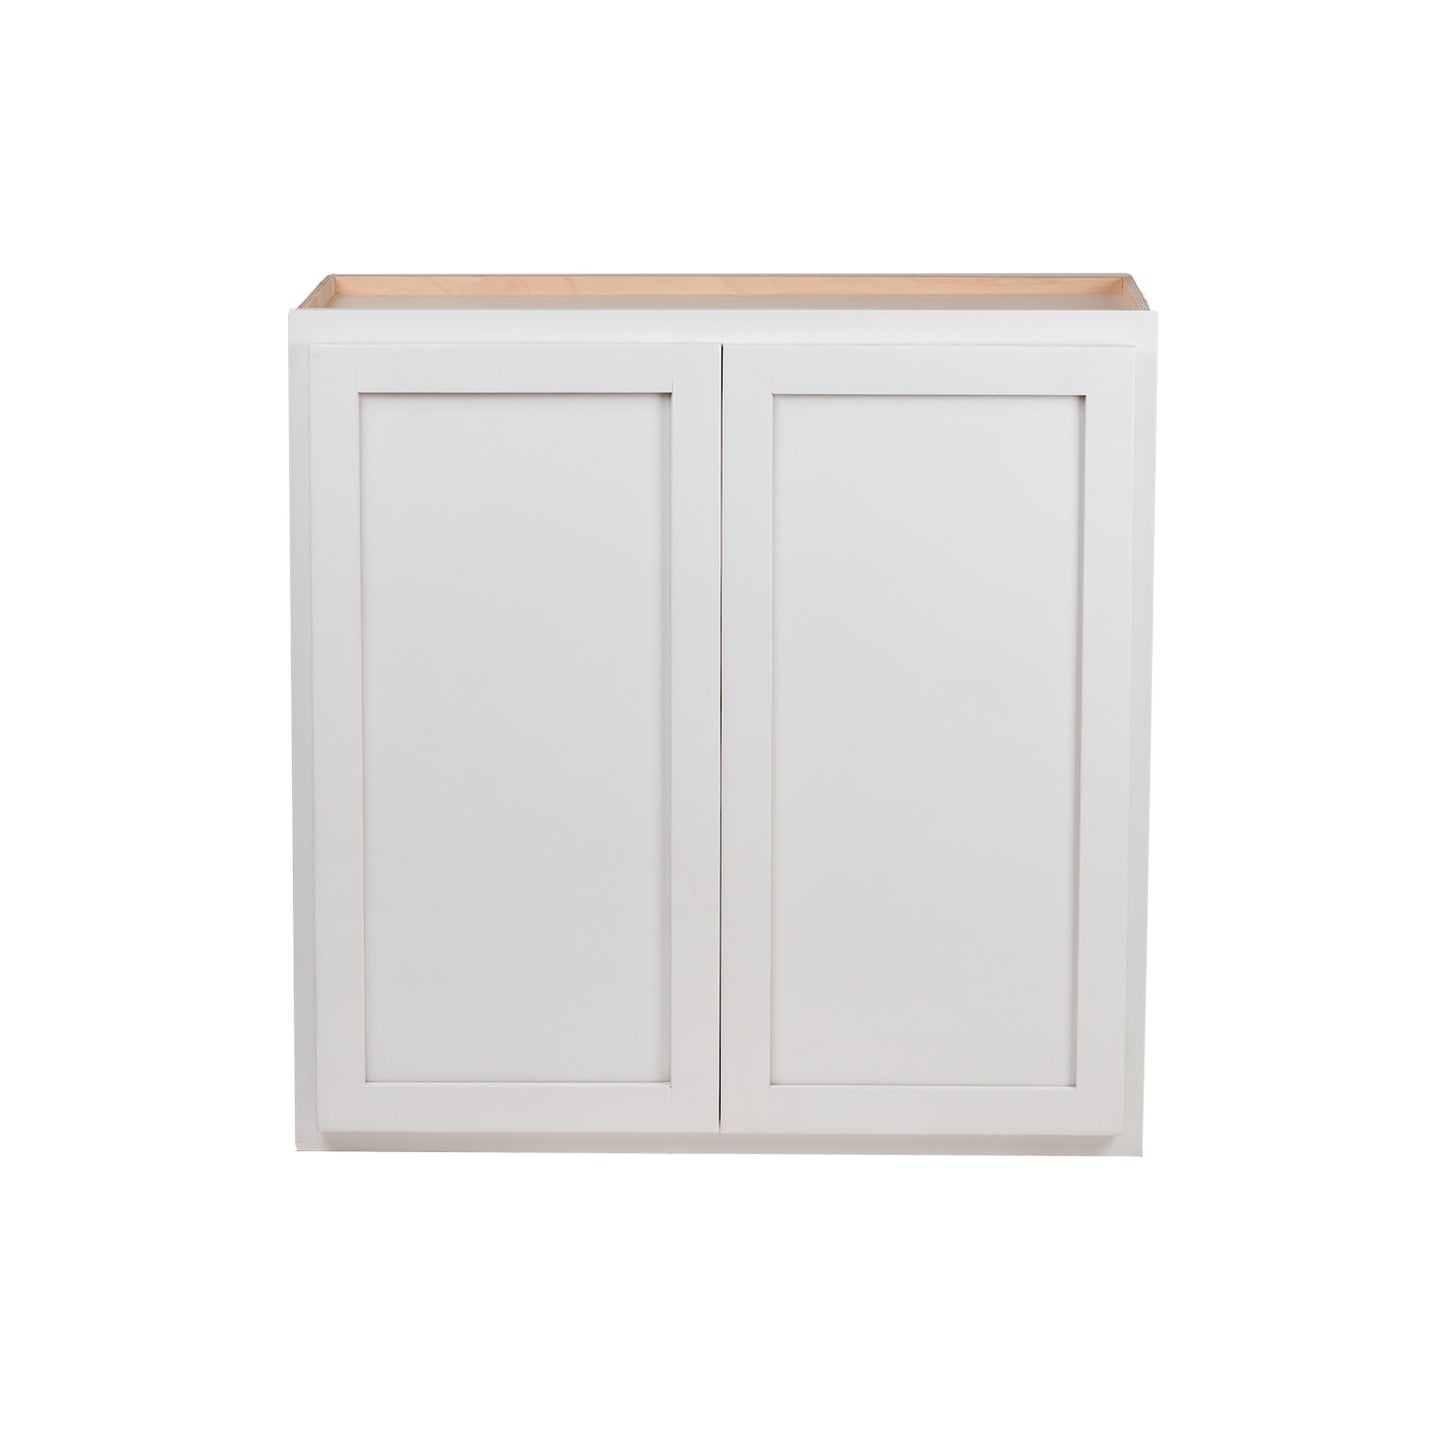 Quicklock RTA (Ready-to-Assemble) Pure White 27"Wx30"Hx12"D Wall Cabinet